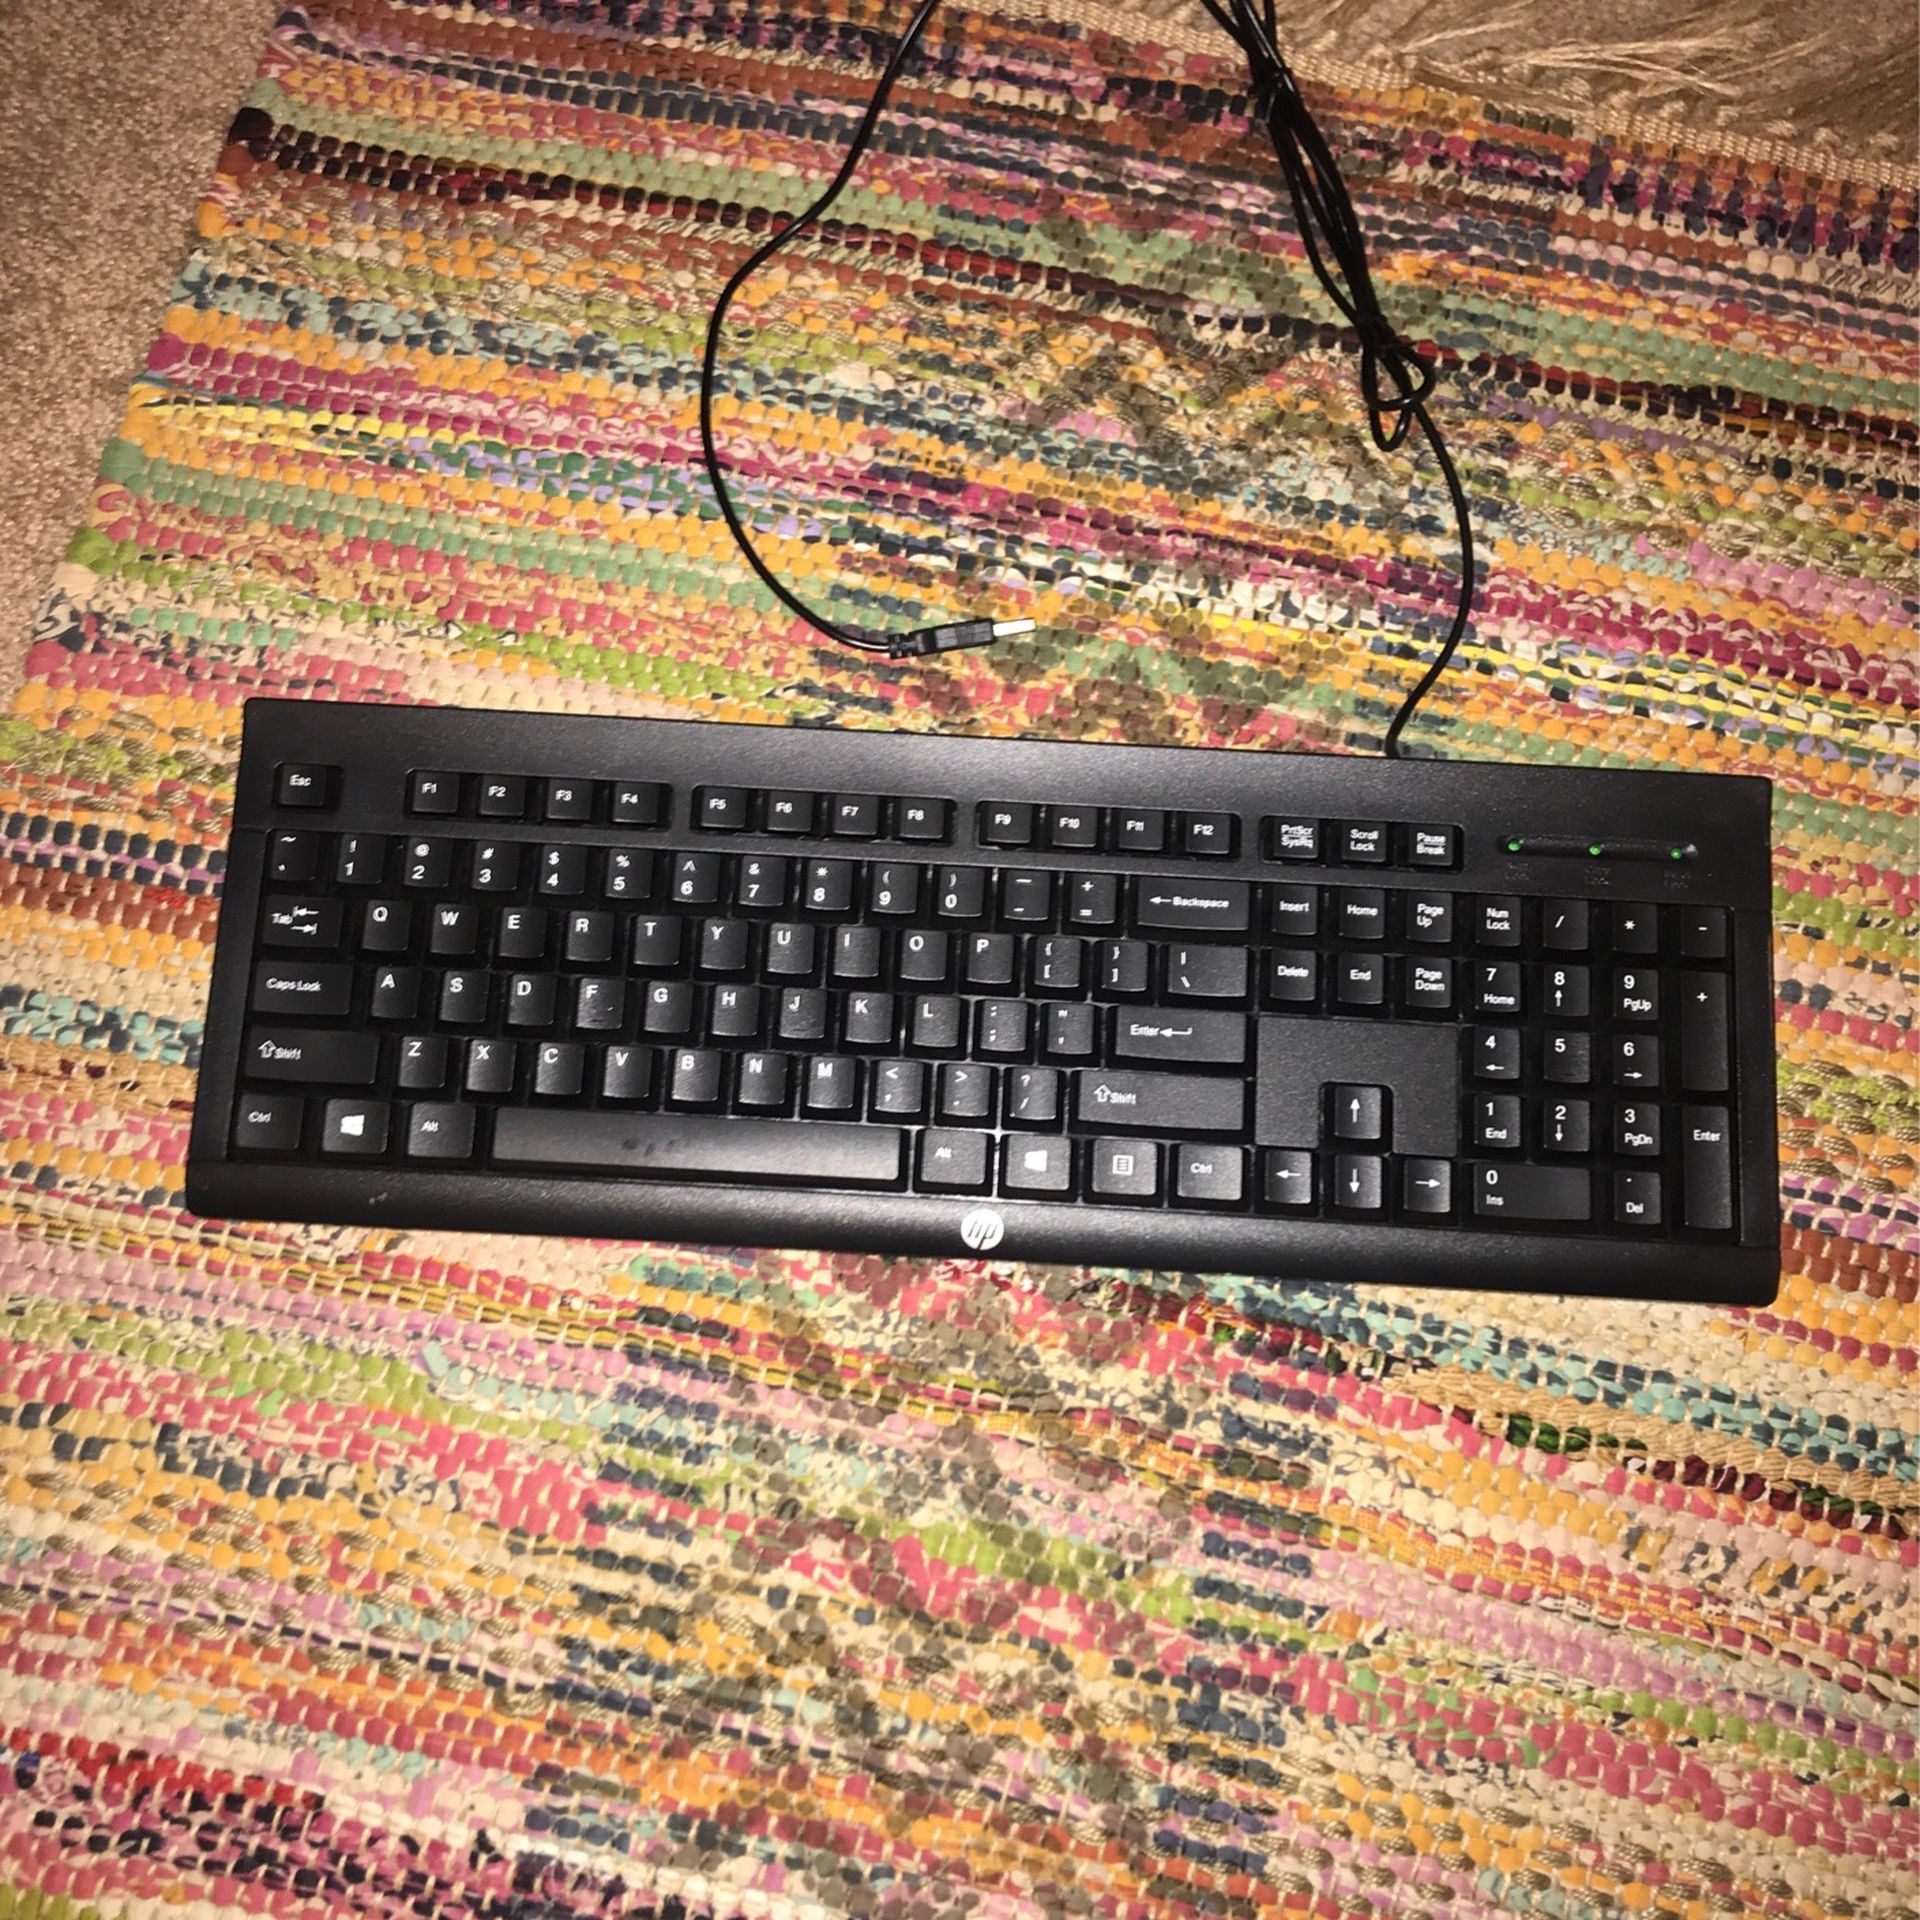 Extra HP keyboard, $7